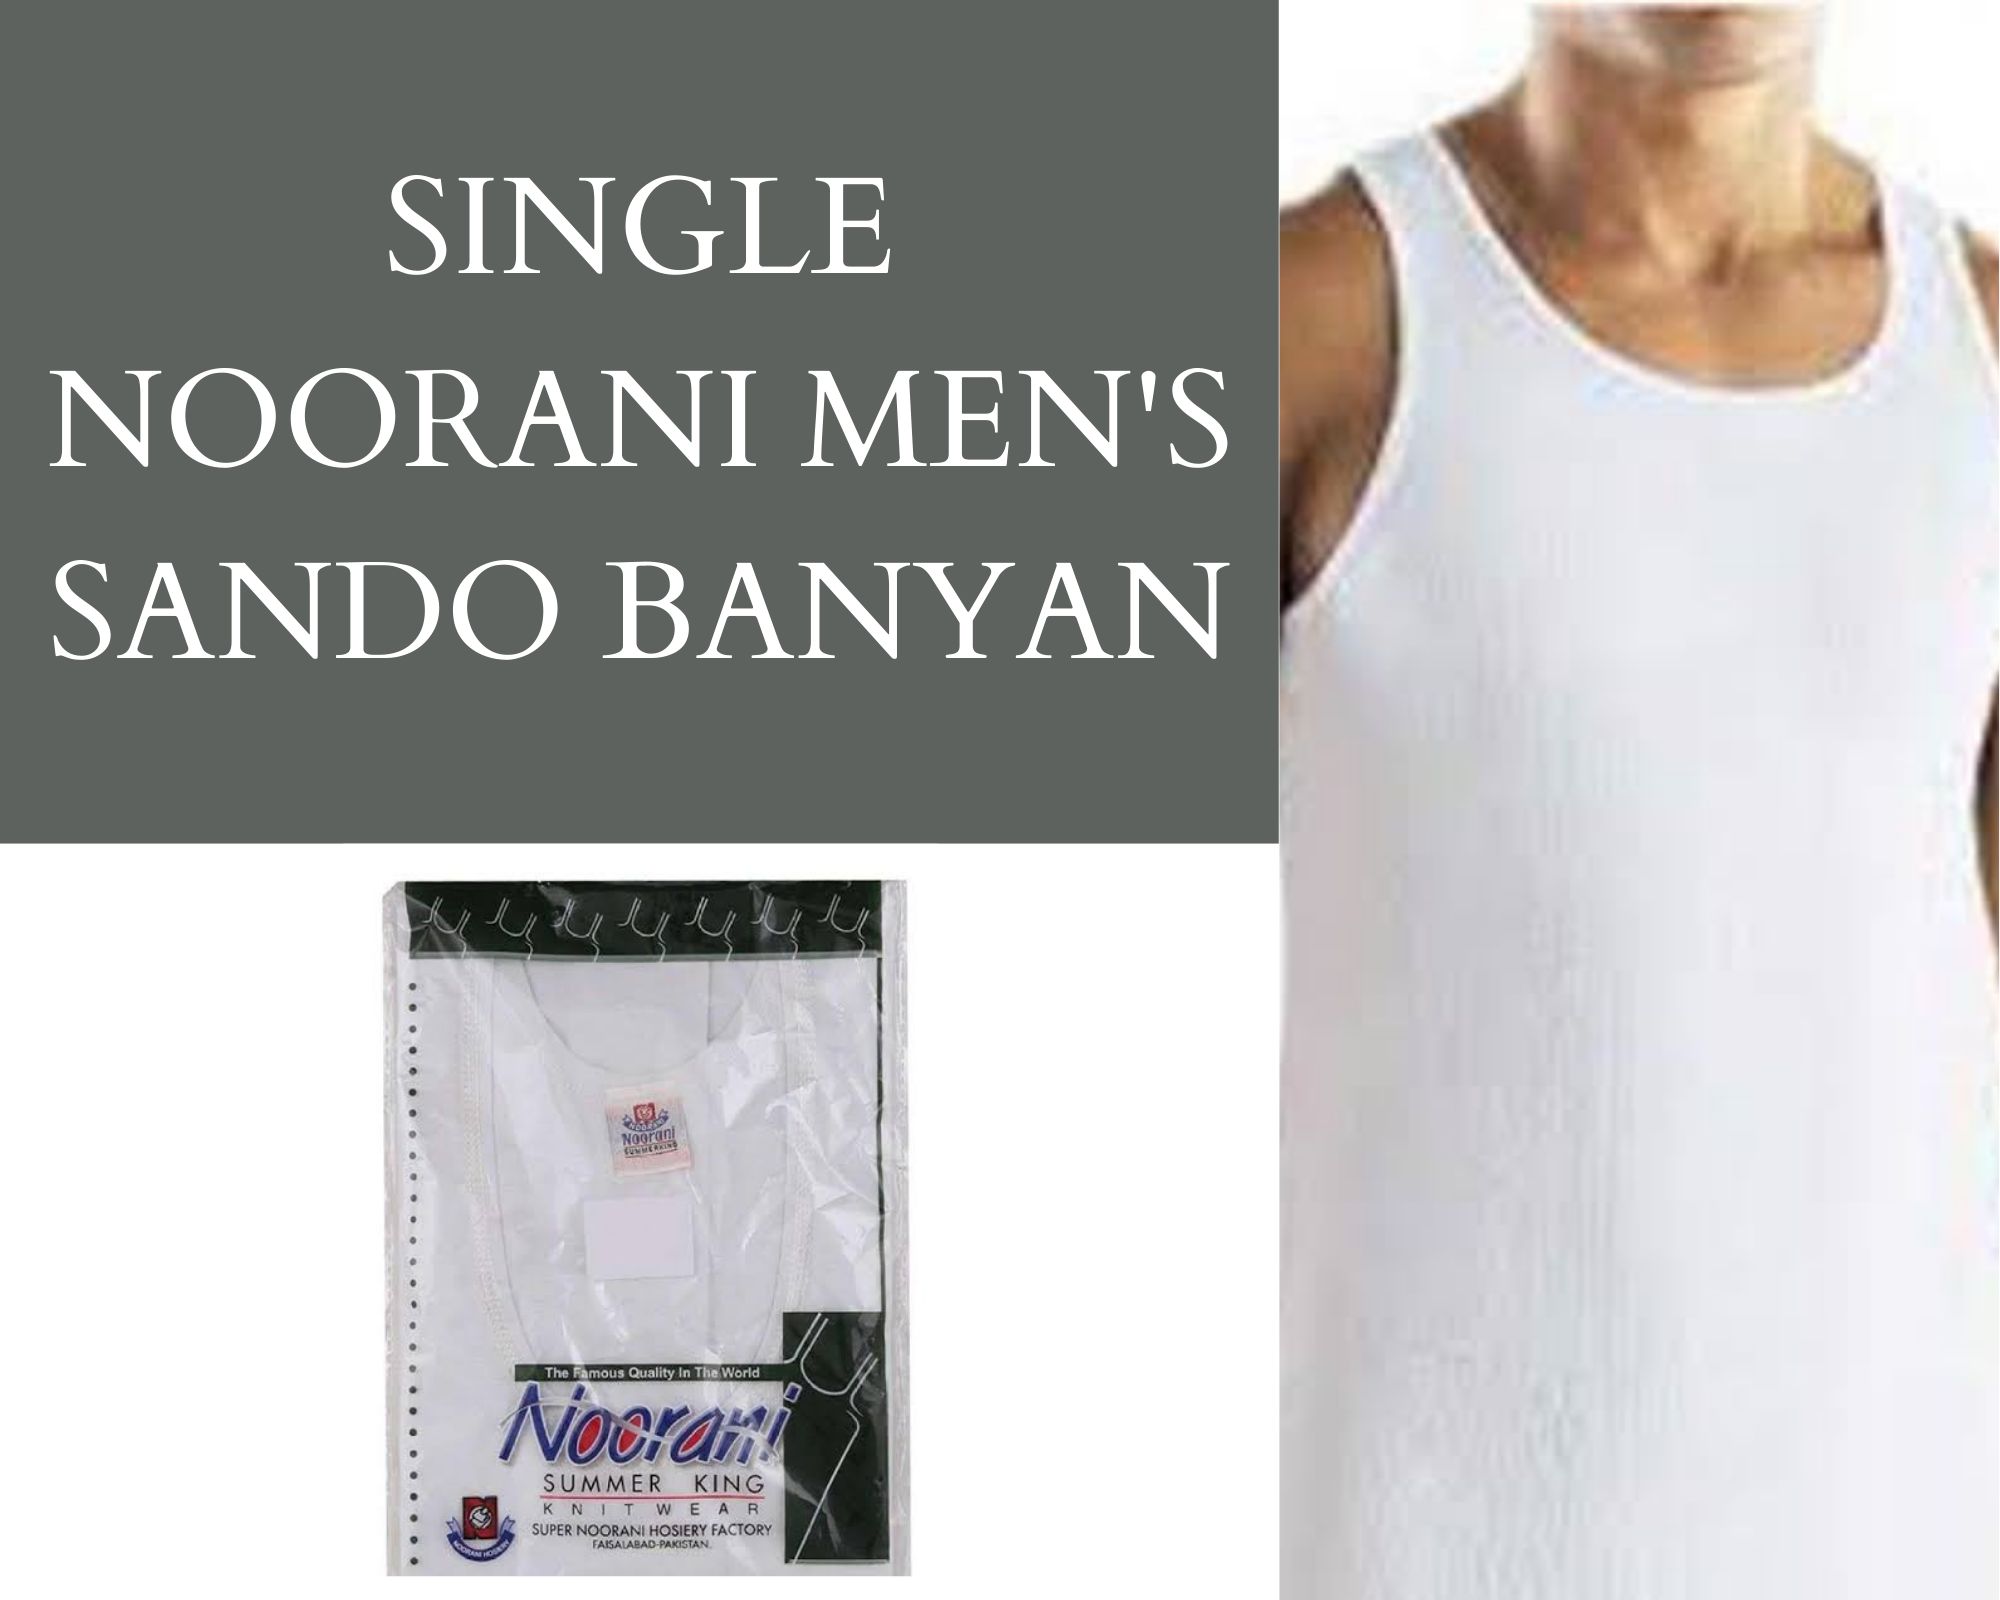 Noorani Men's Sando Banyan - Original Noorani Cotton Vest